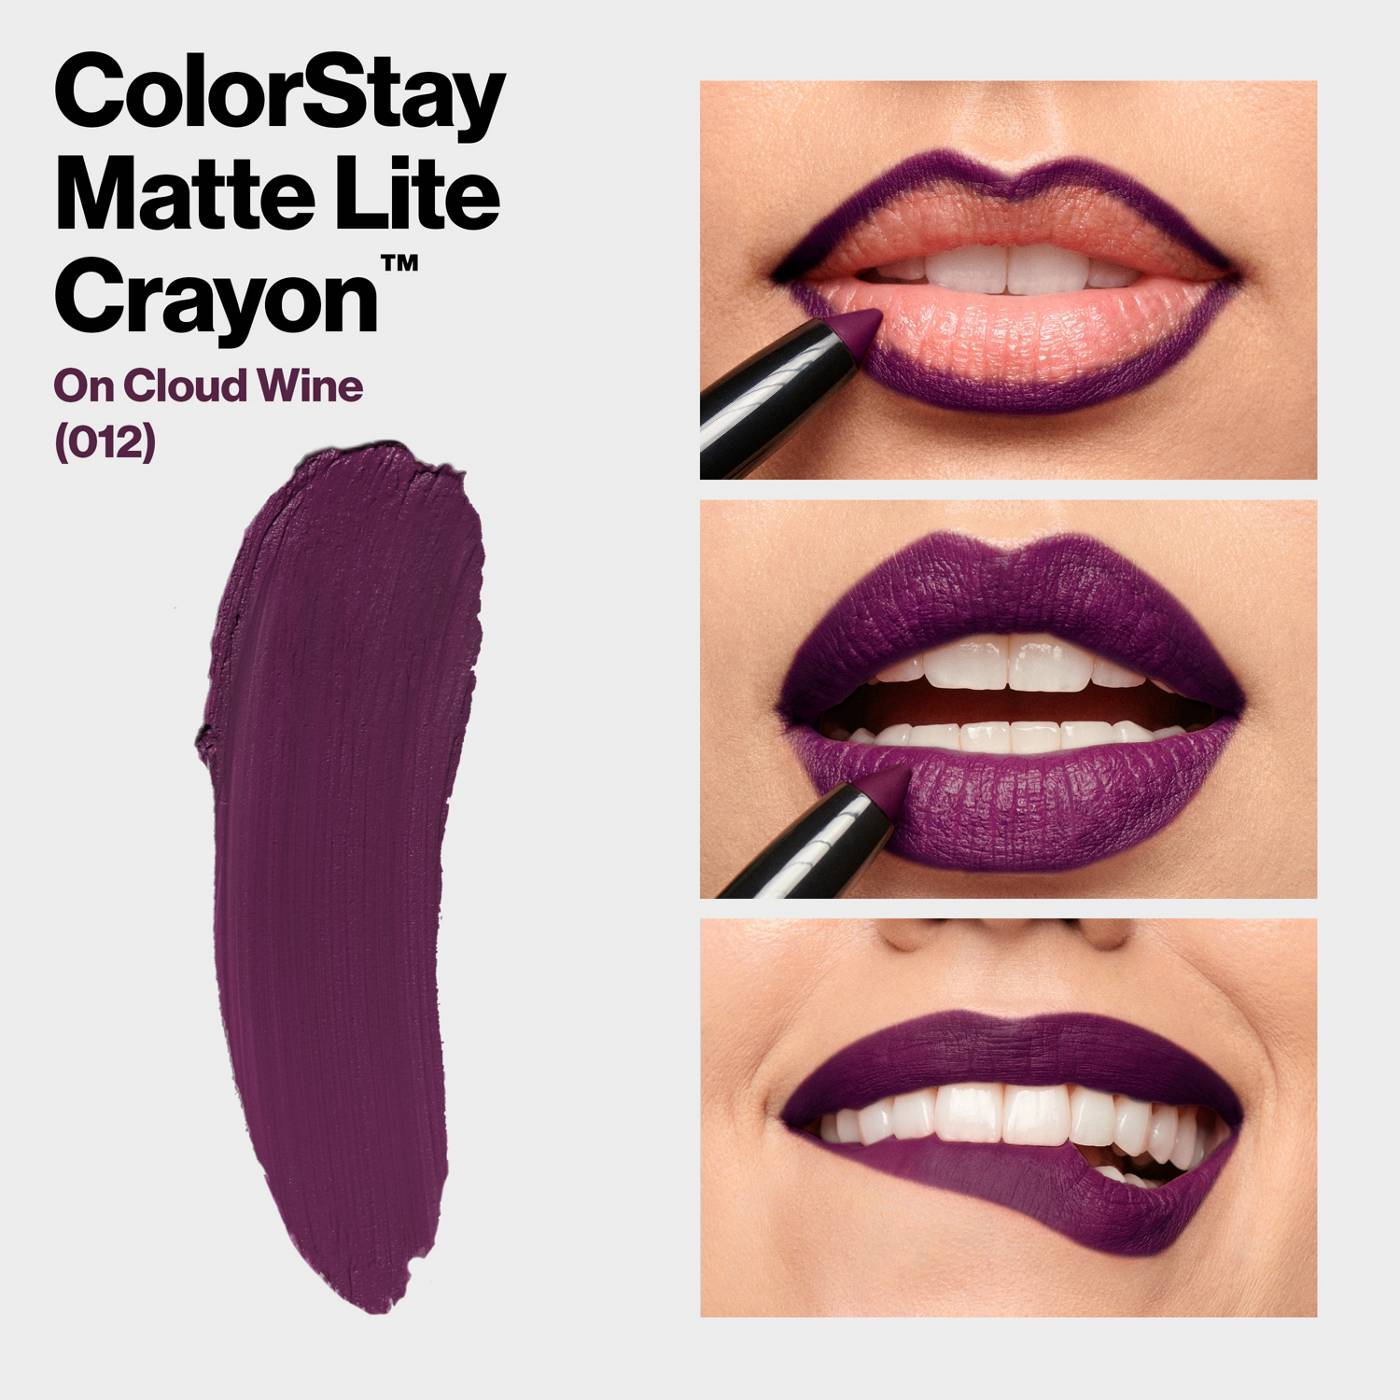 Revlon ColorStay Matte Lite Crayon Lipstick - On Cloud Wine; image 4 of 7